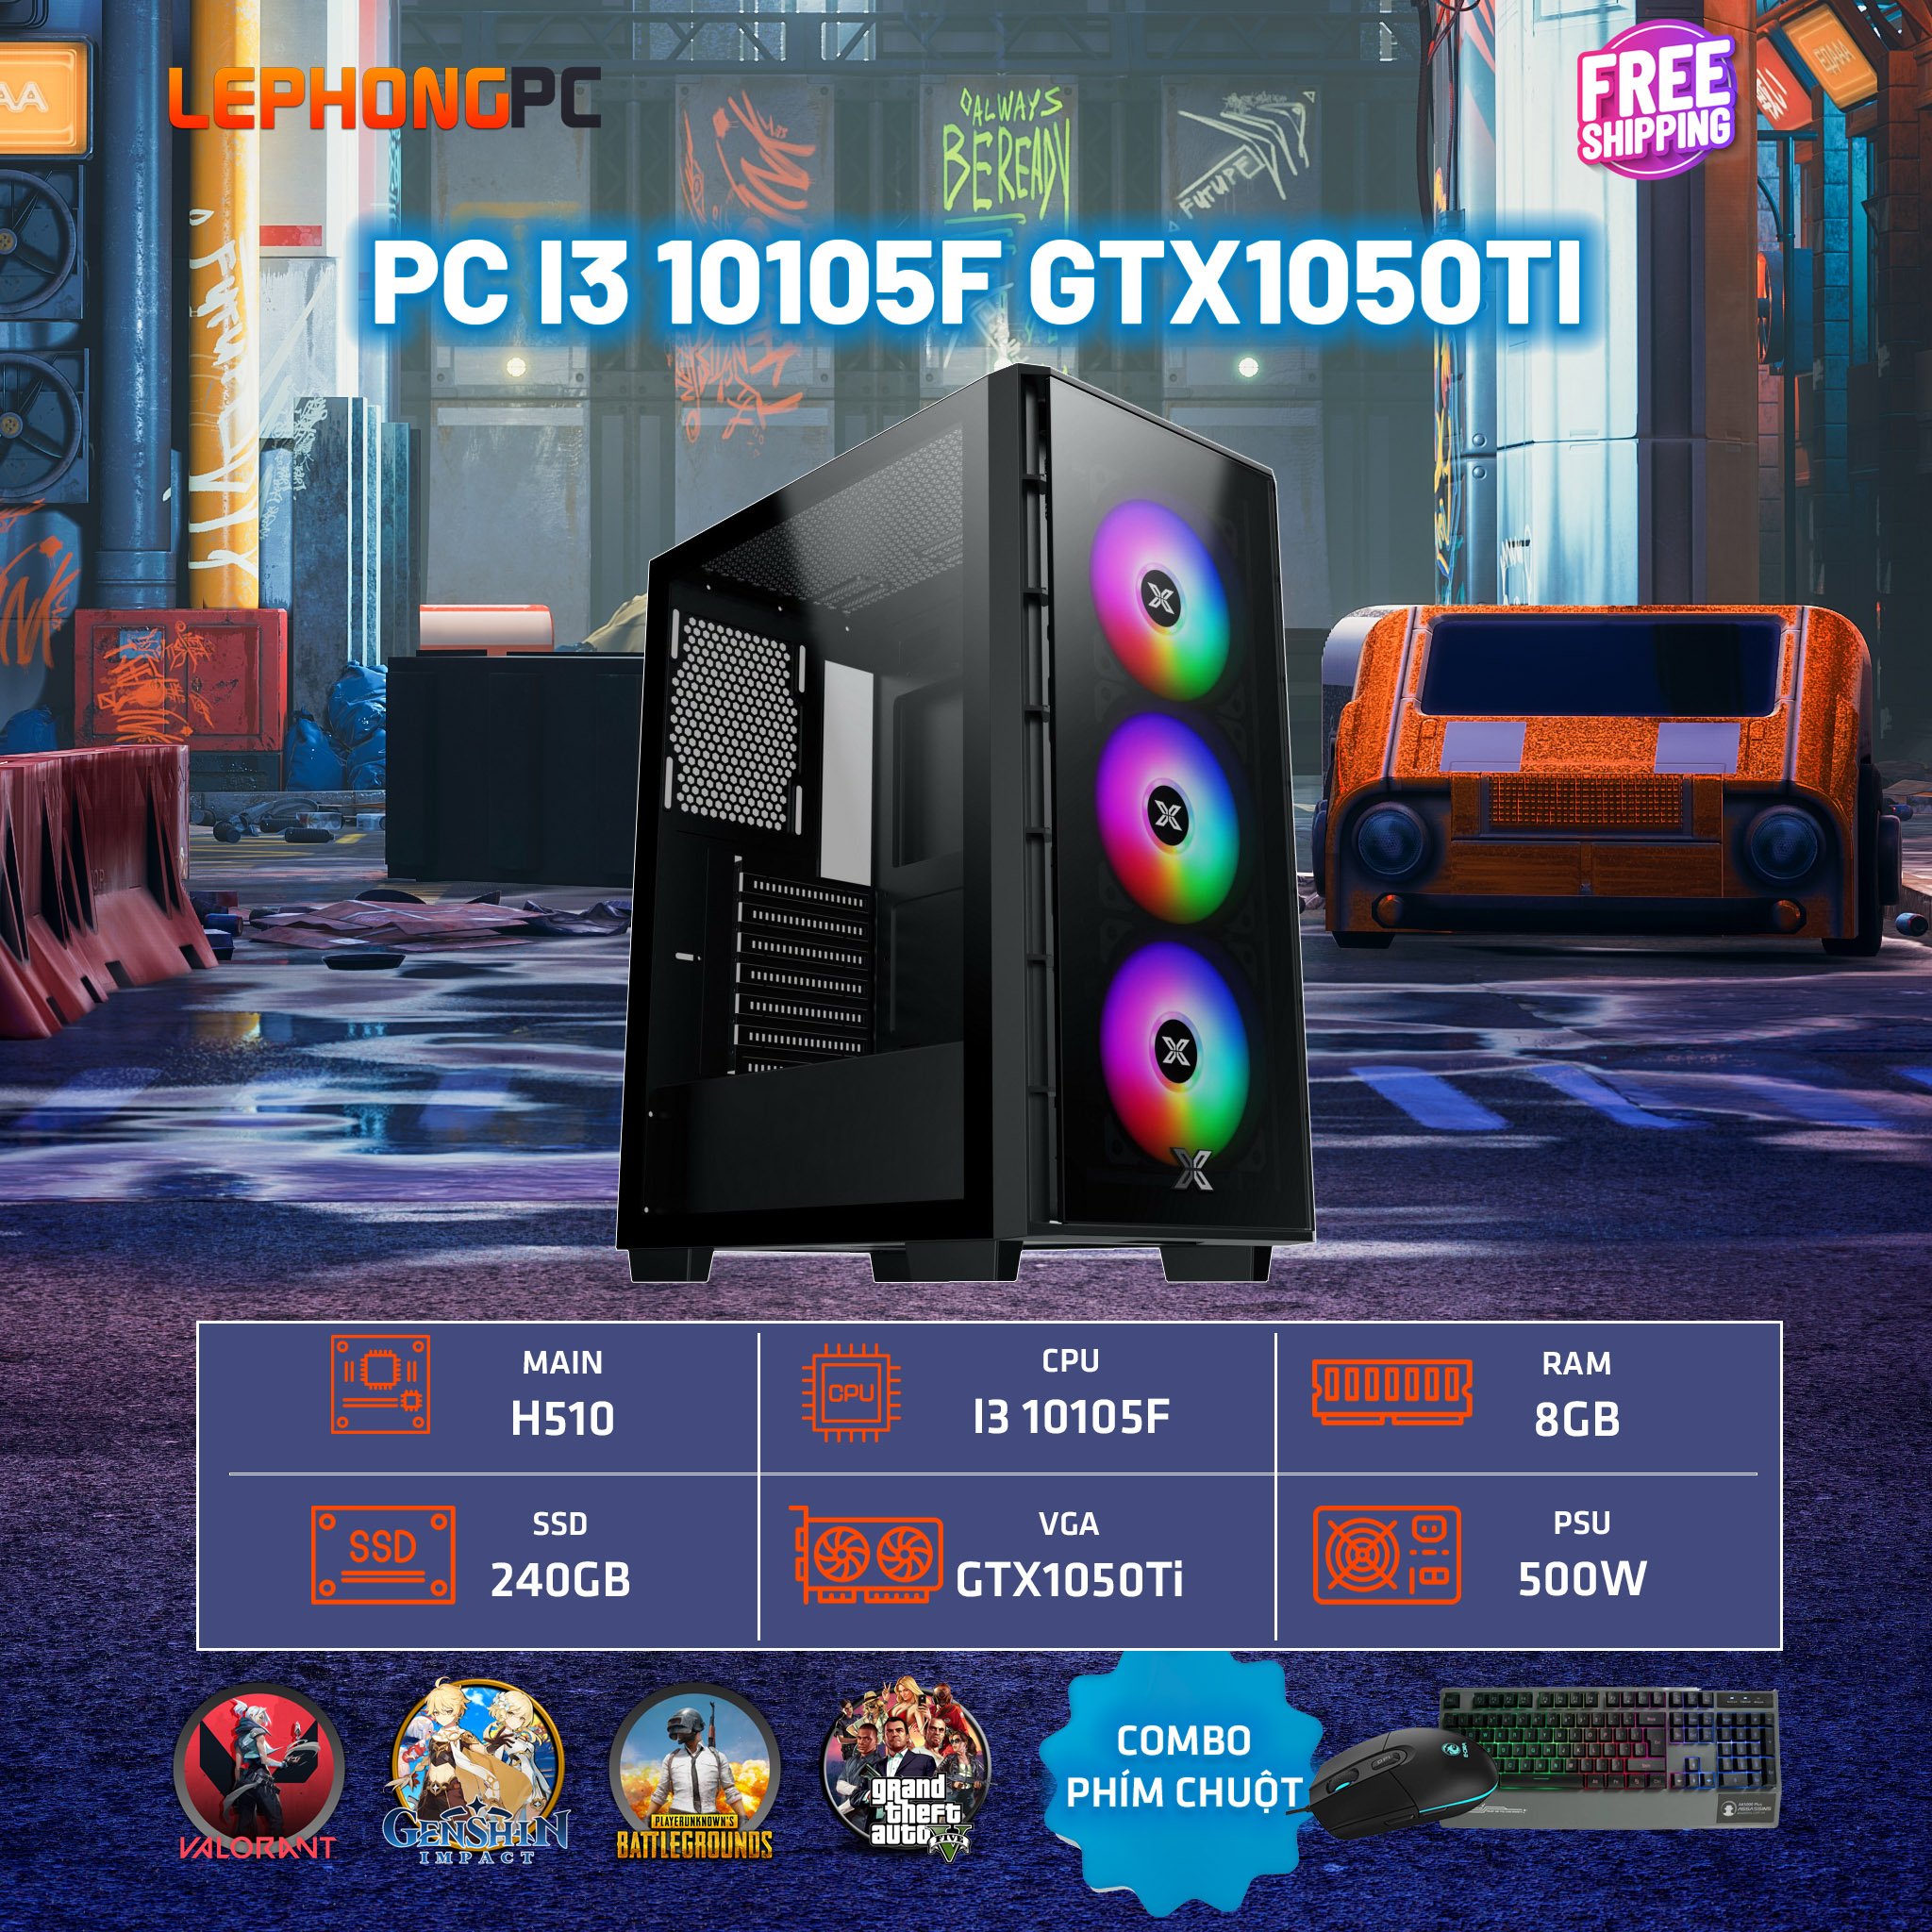 PC I3 10105F GTX1050TI